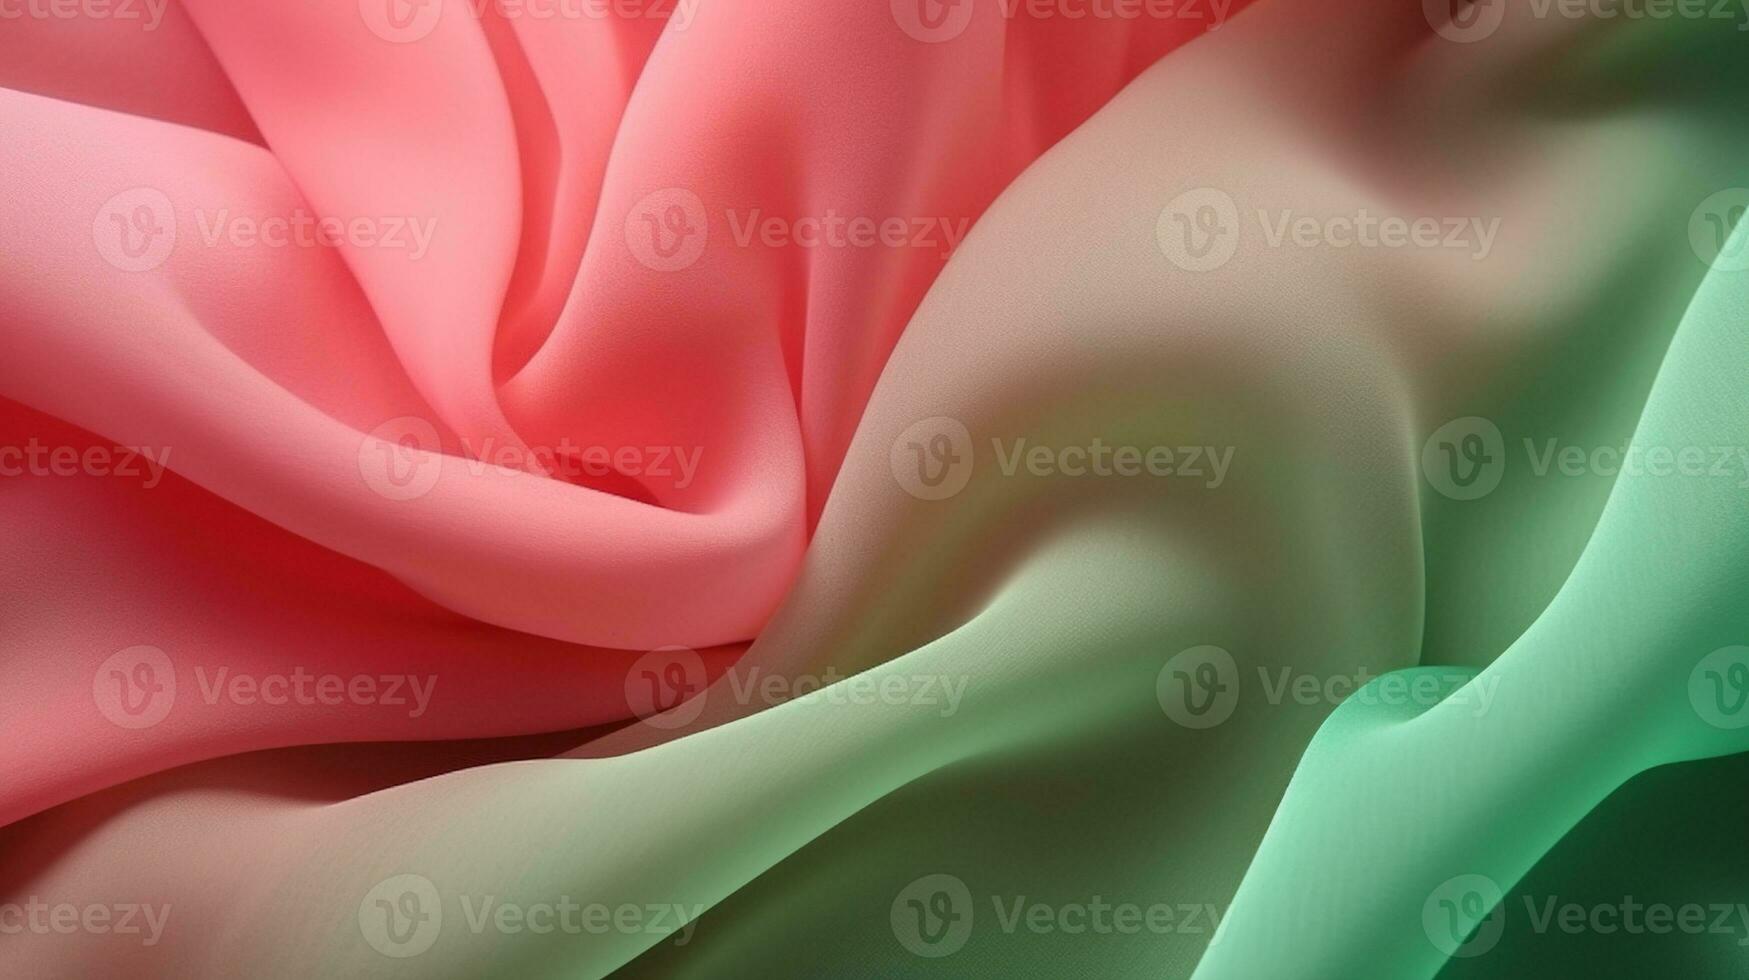 generatief ai, vloeiende chiffon kleding stof structuur in licht roze en groen kleur. glanzend voorjaar banier, materiaal 3d effect, modern macro fotorealistisch abstract achtergrond illustratie foto